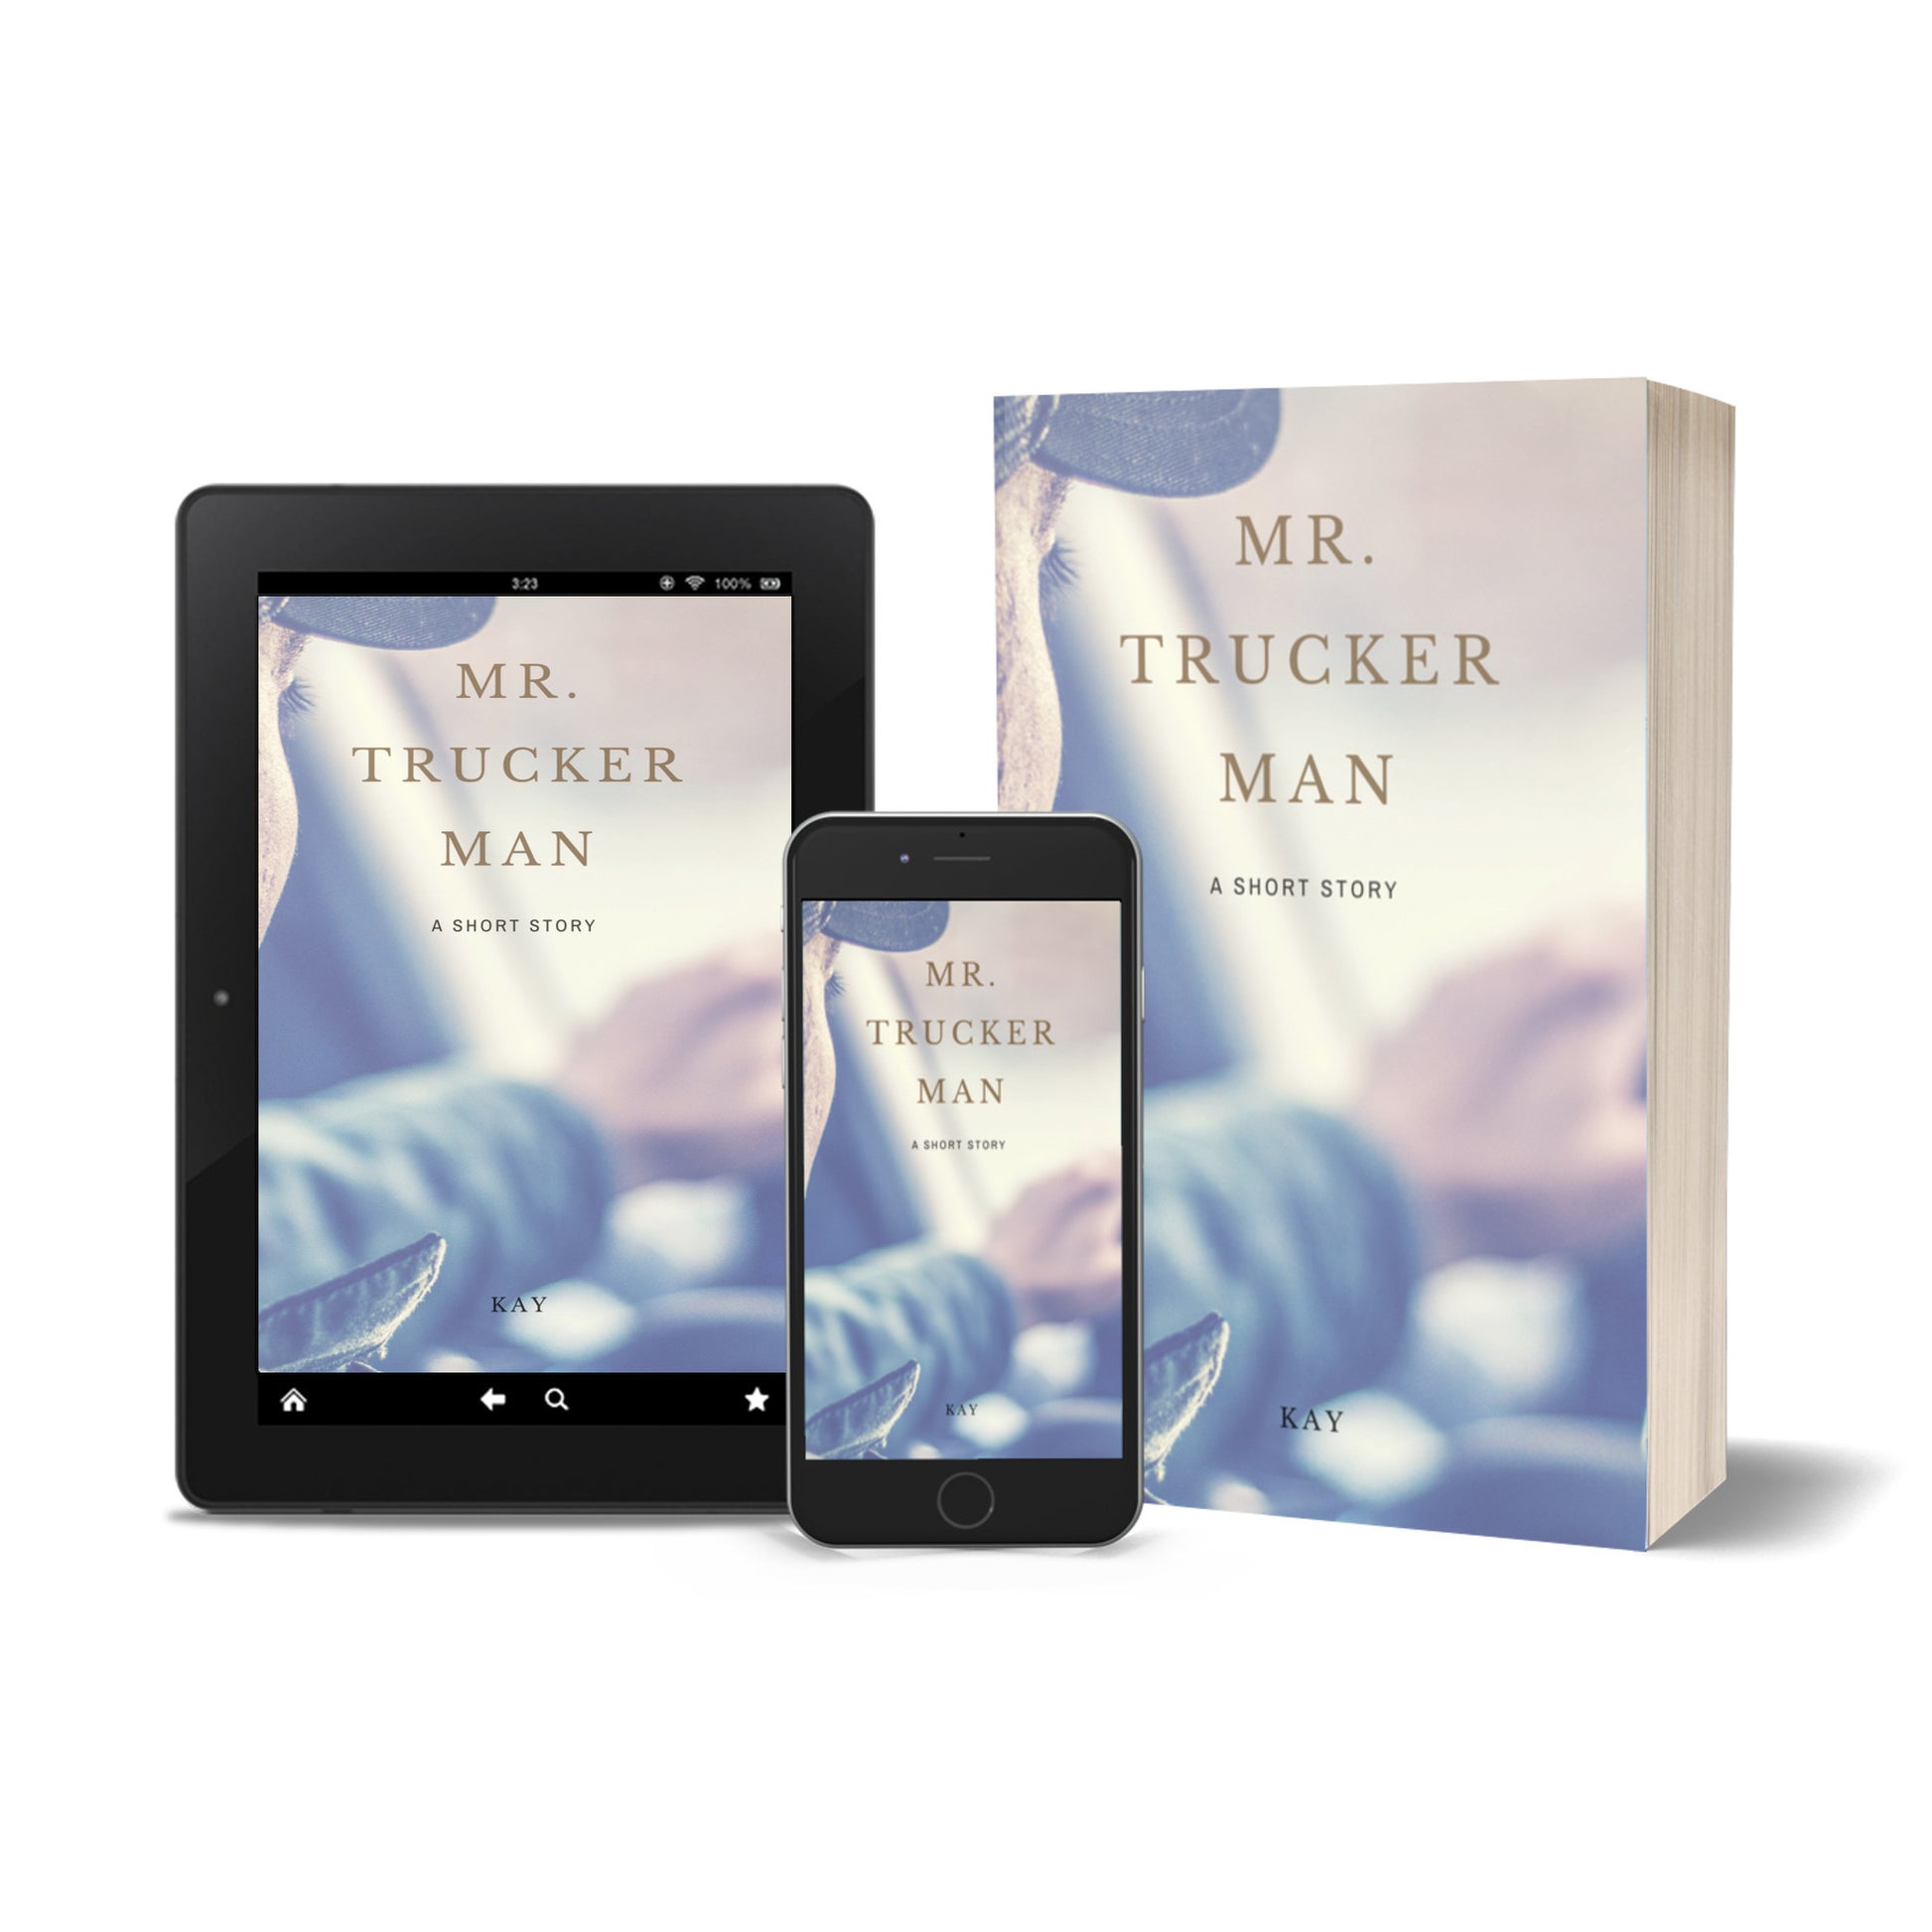 Mr. Trucker Man - A Short Story by Kay Digital Download